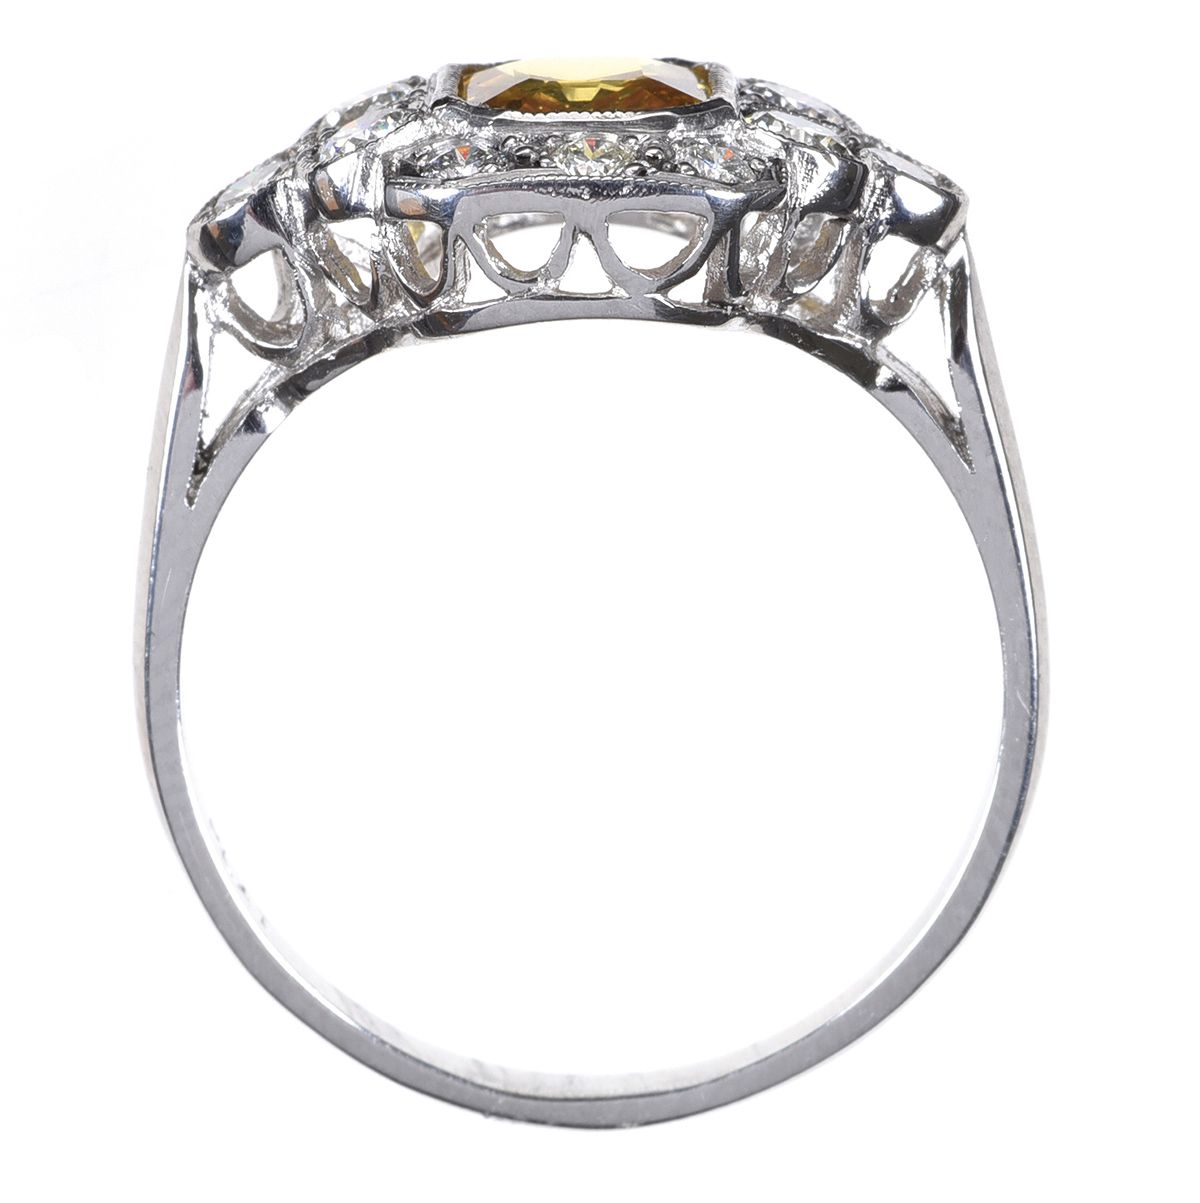 PLATINUM YELLOW SAPPHIRE & DIAMOND RING at Ross's Online Art Auctions